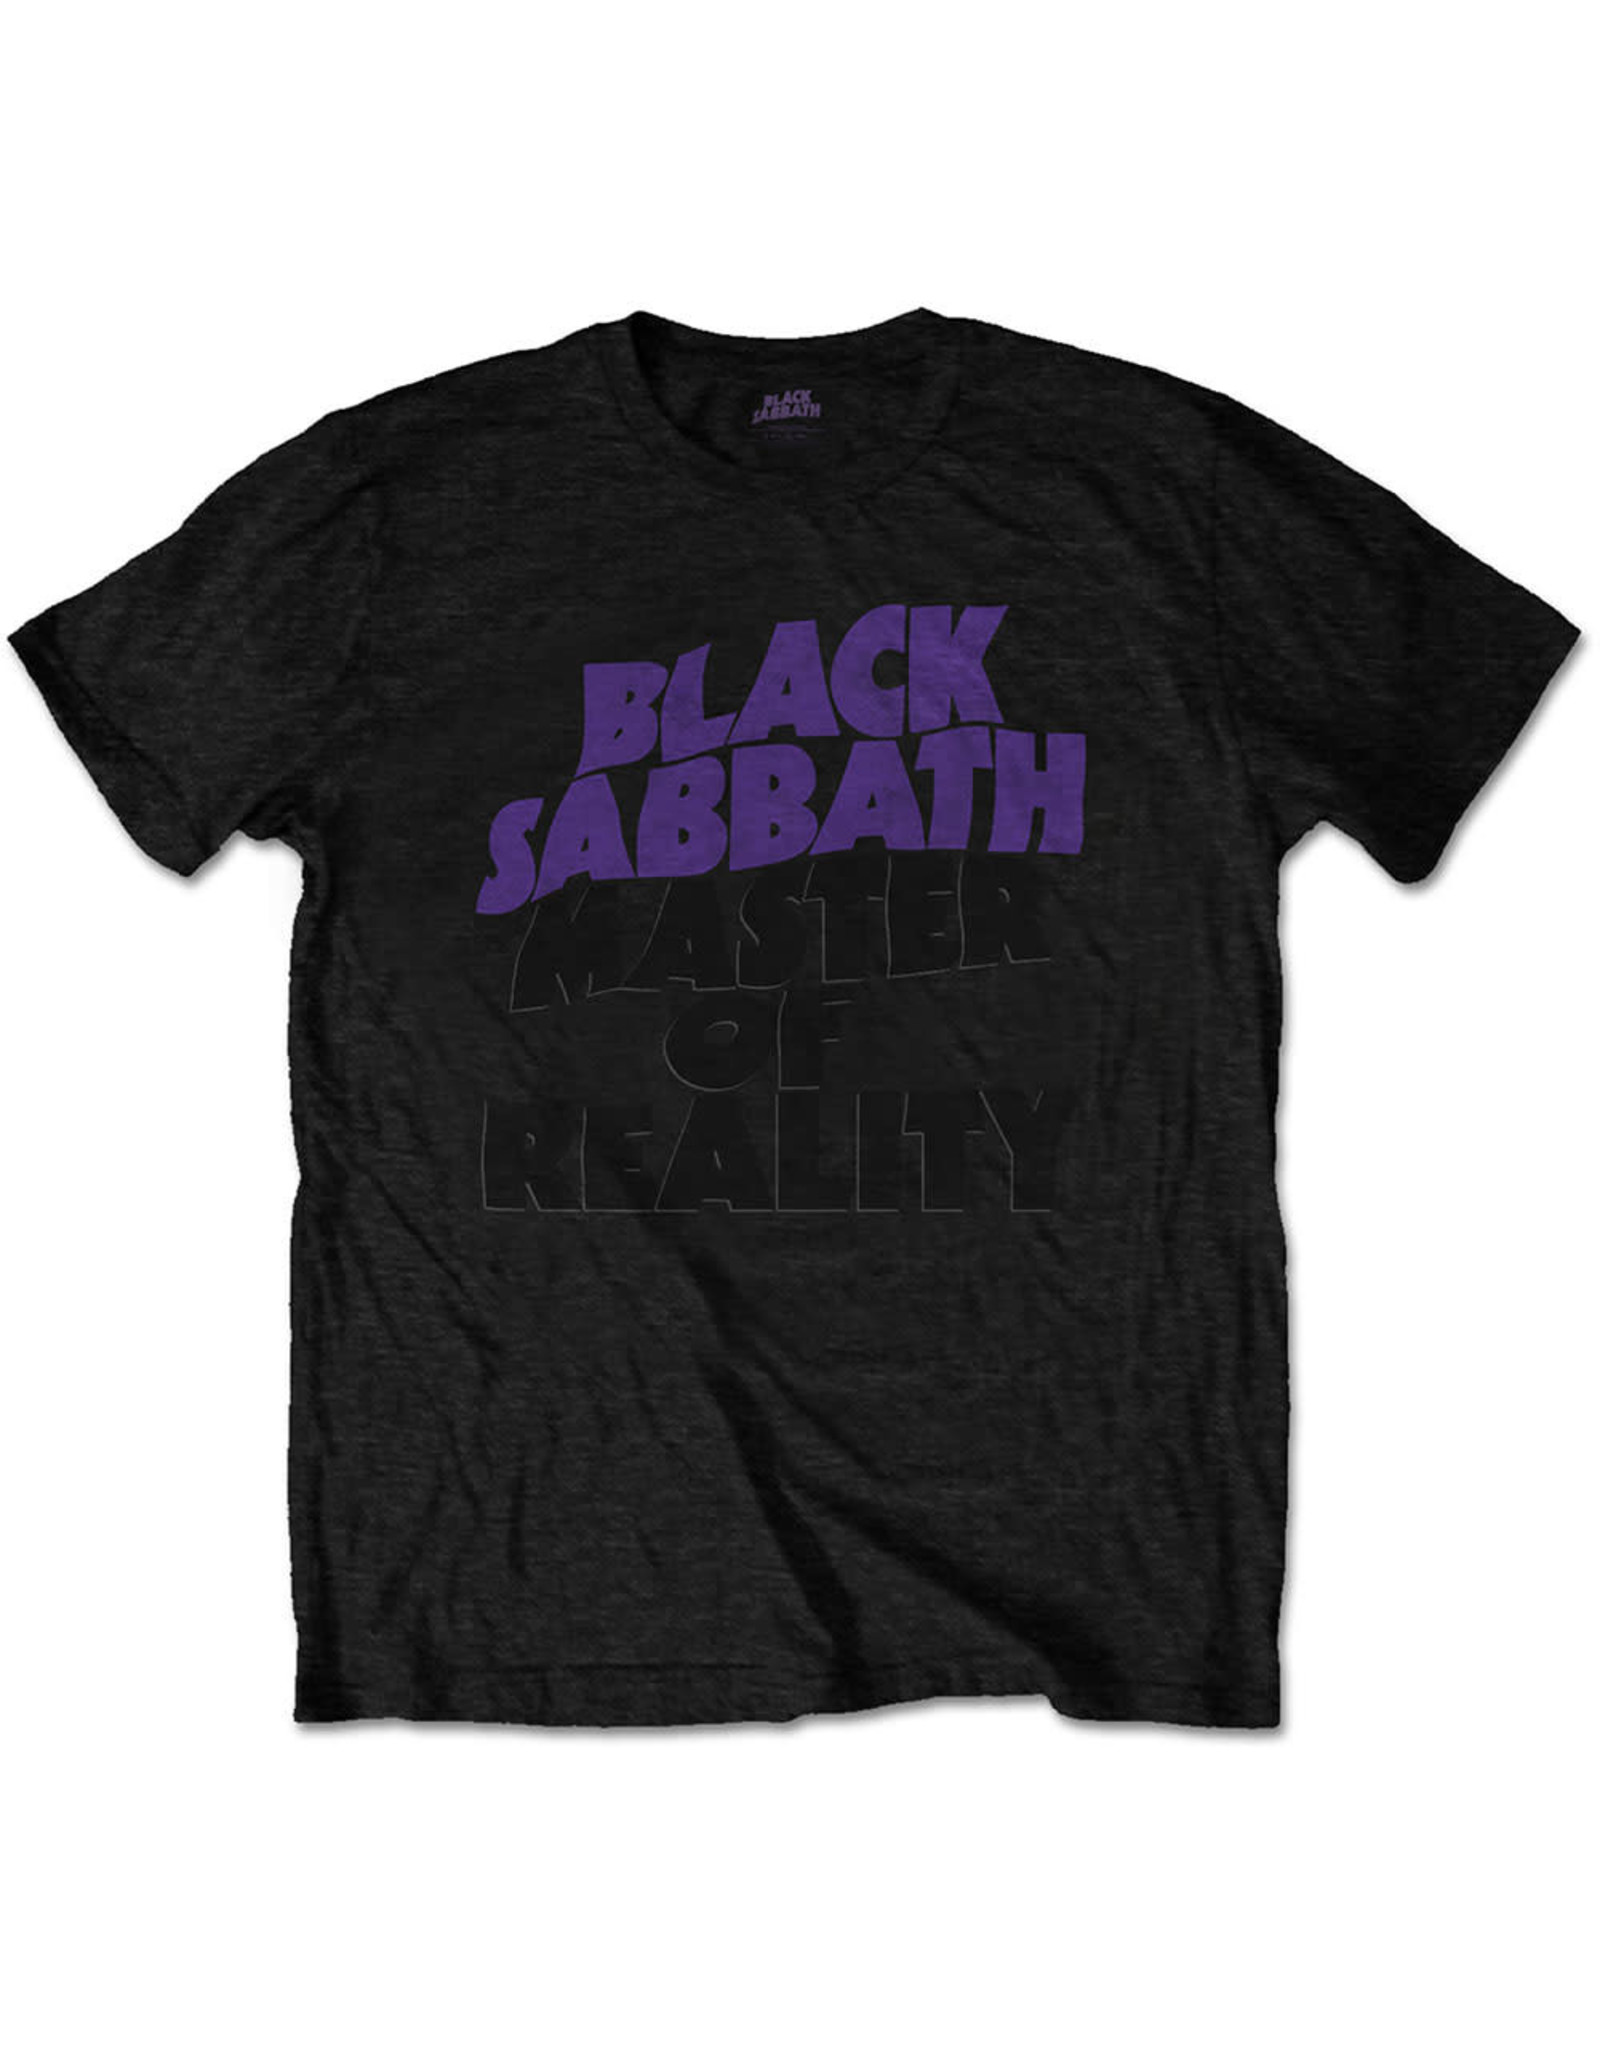 Black Sabbath / Master Of Reality Tee